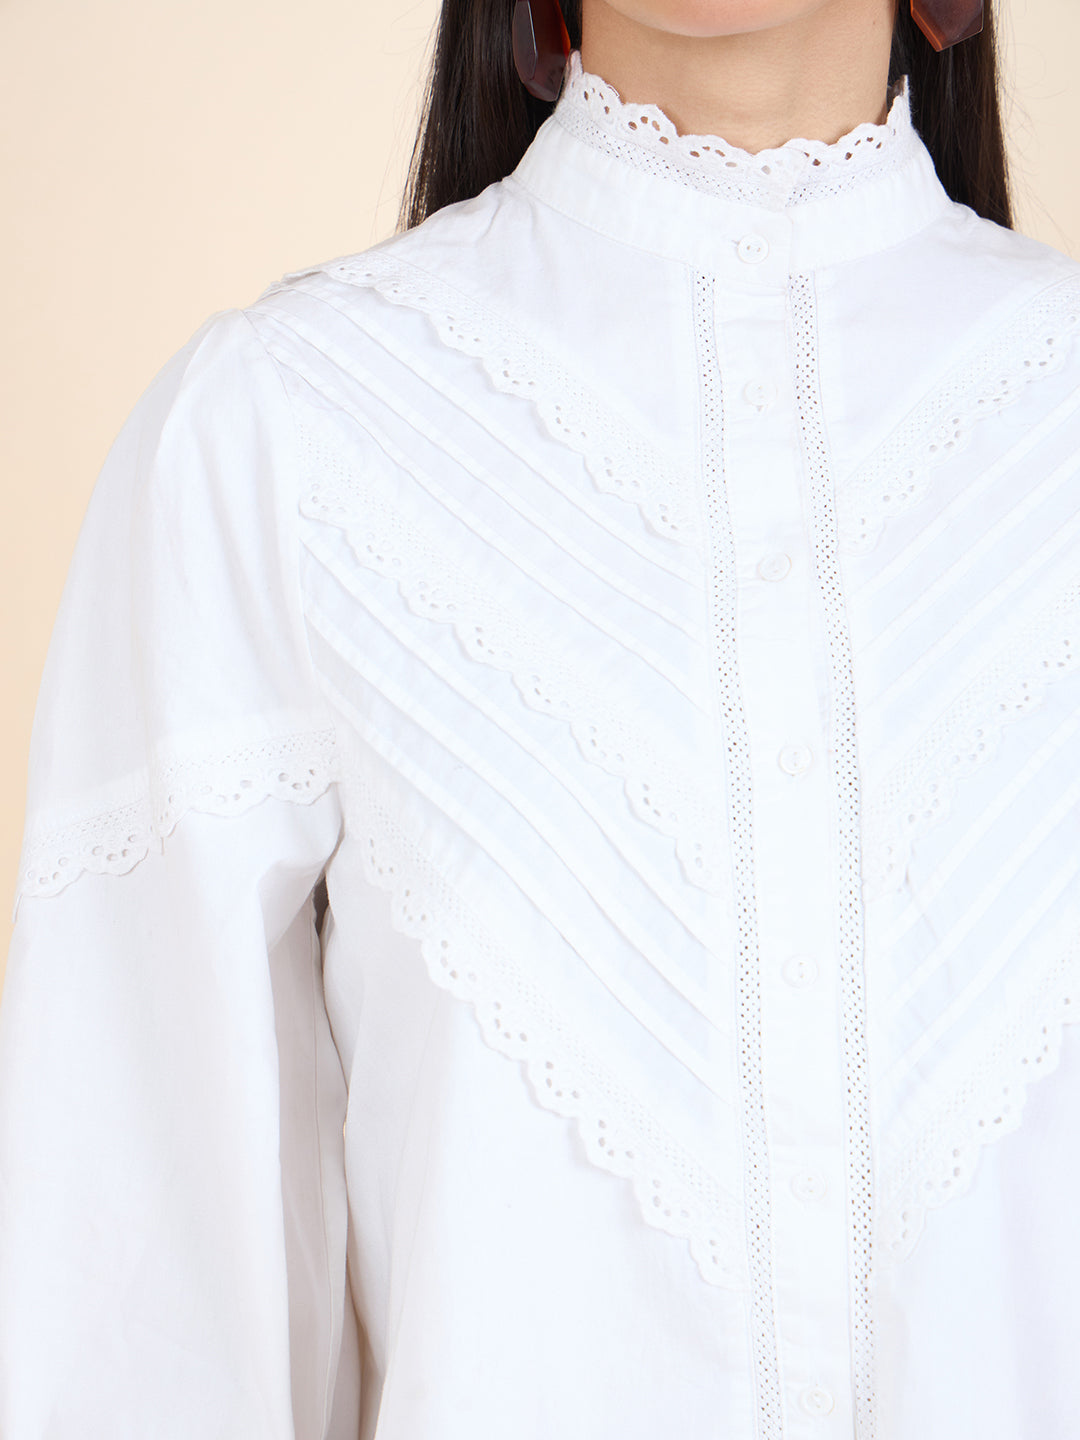 Gipsy Stylish Women Shirts Collection White